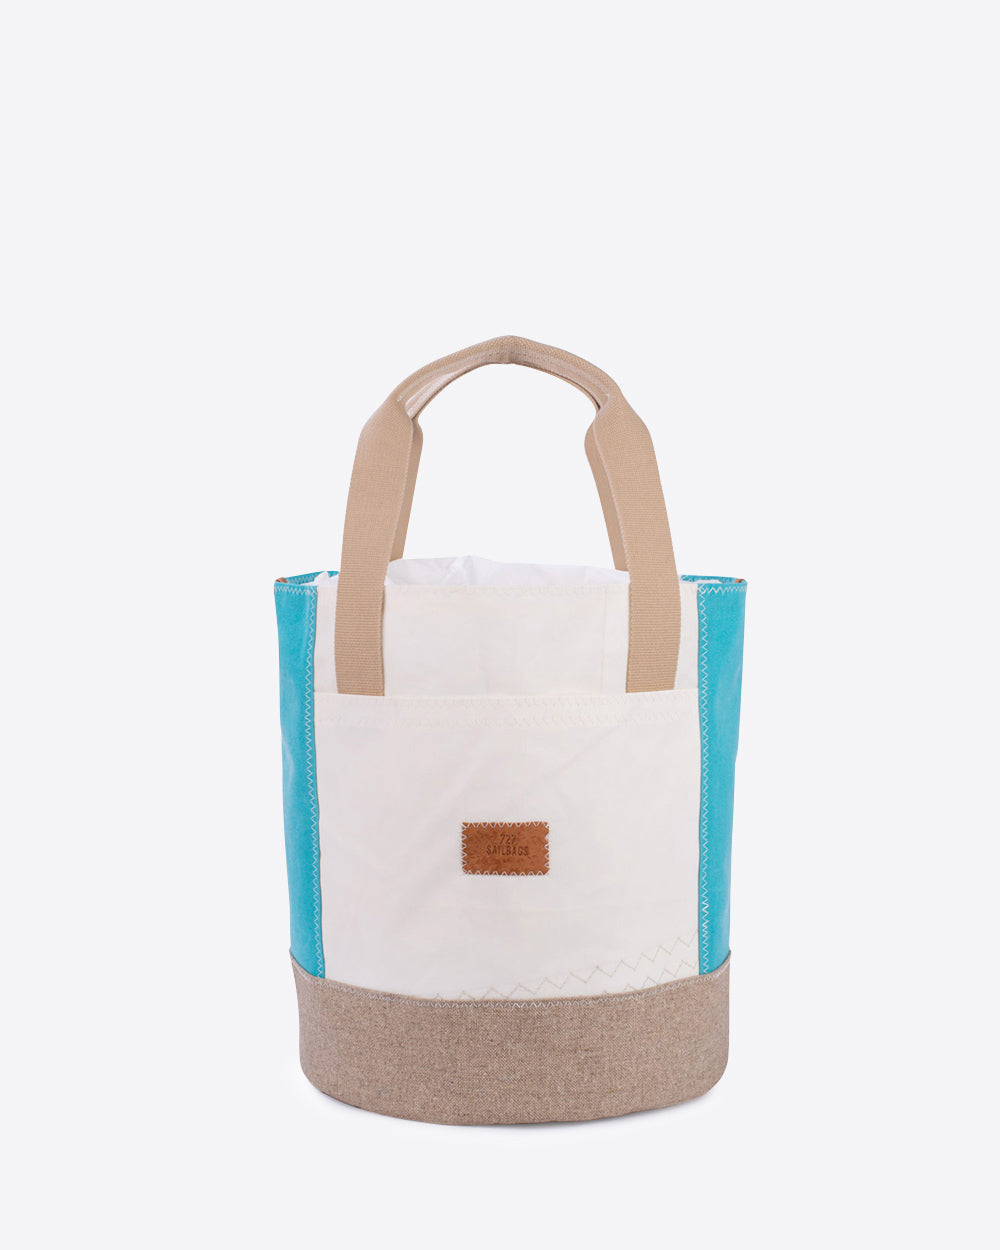 Damen Handtasche "Bucket Bag" by 727 Sailbags / Segeltuch weiß türkis / Boden Leinen